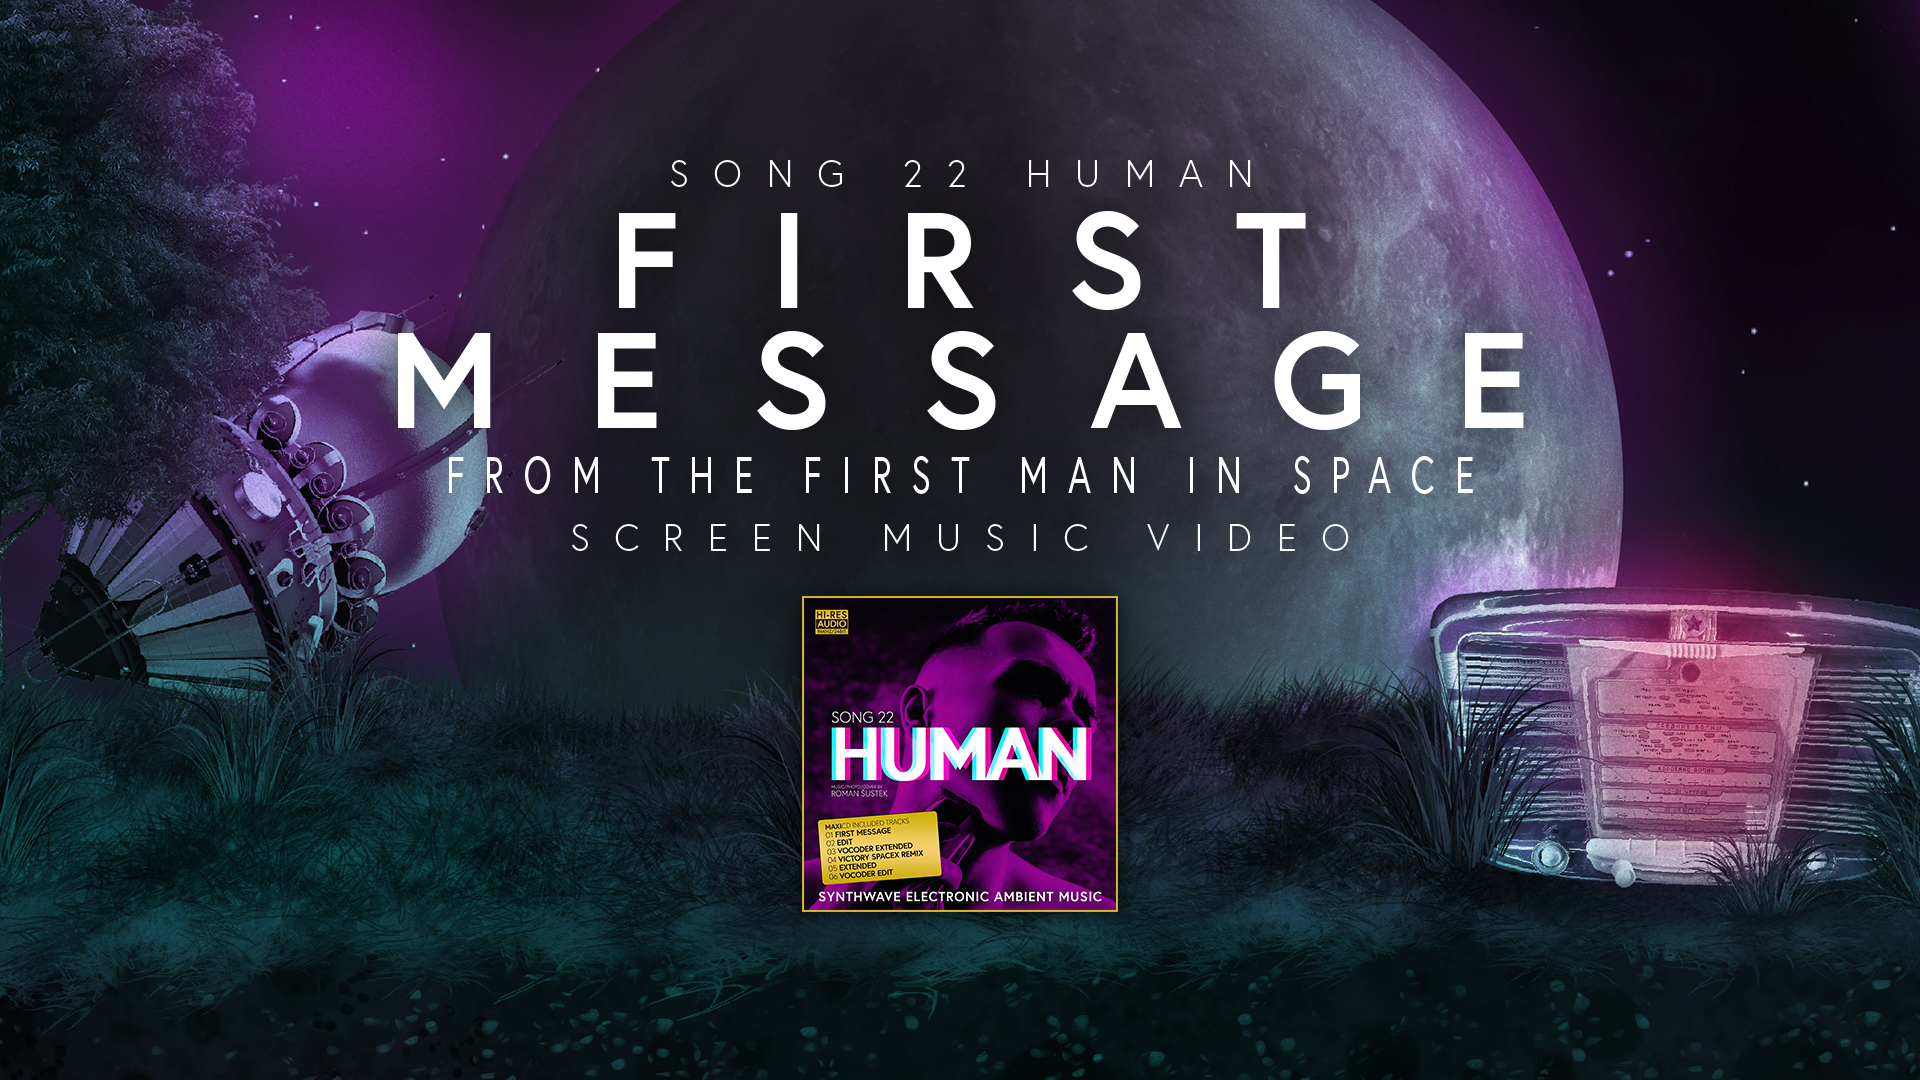 art_history_2021_roman_sustek_ambient_screen_music_video_first_message_song_22_human